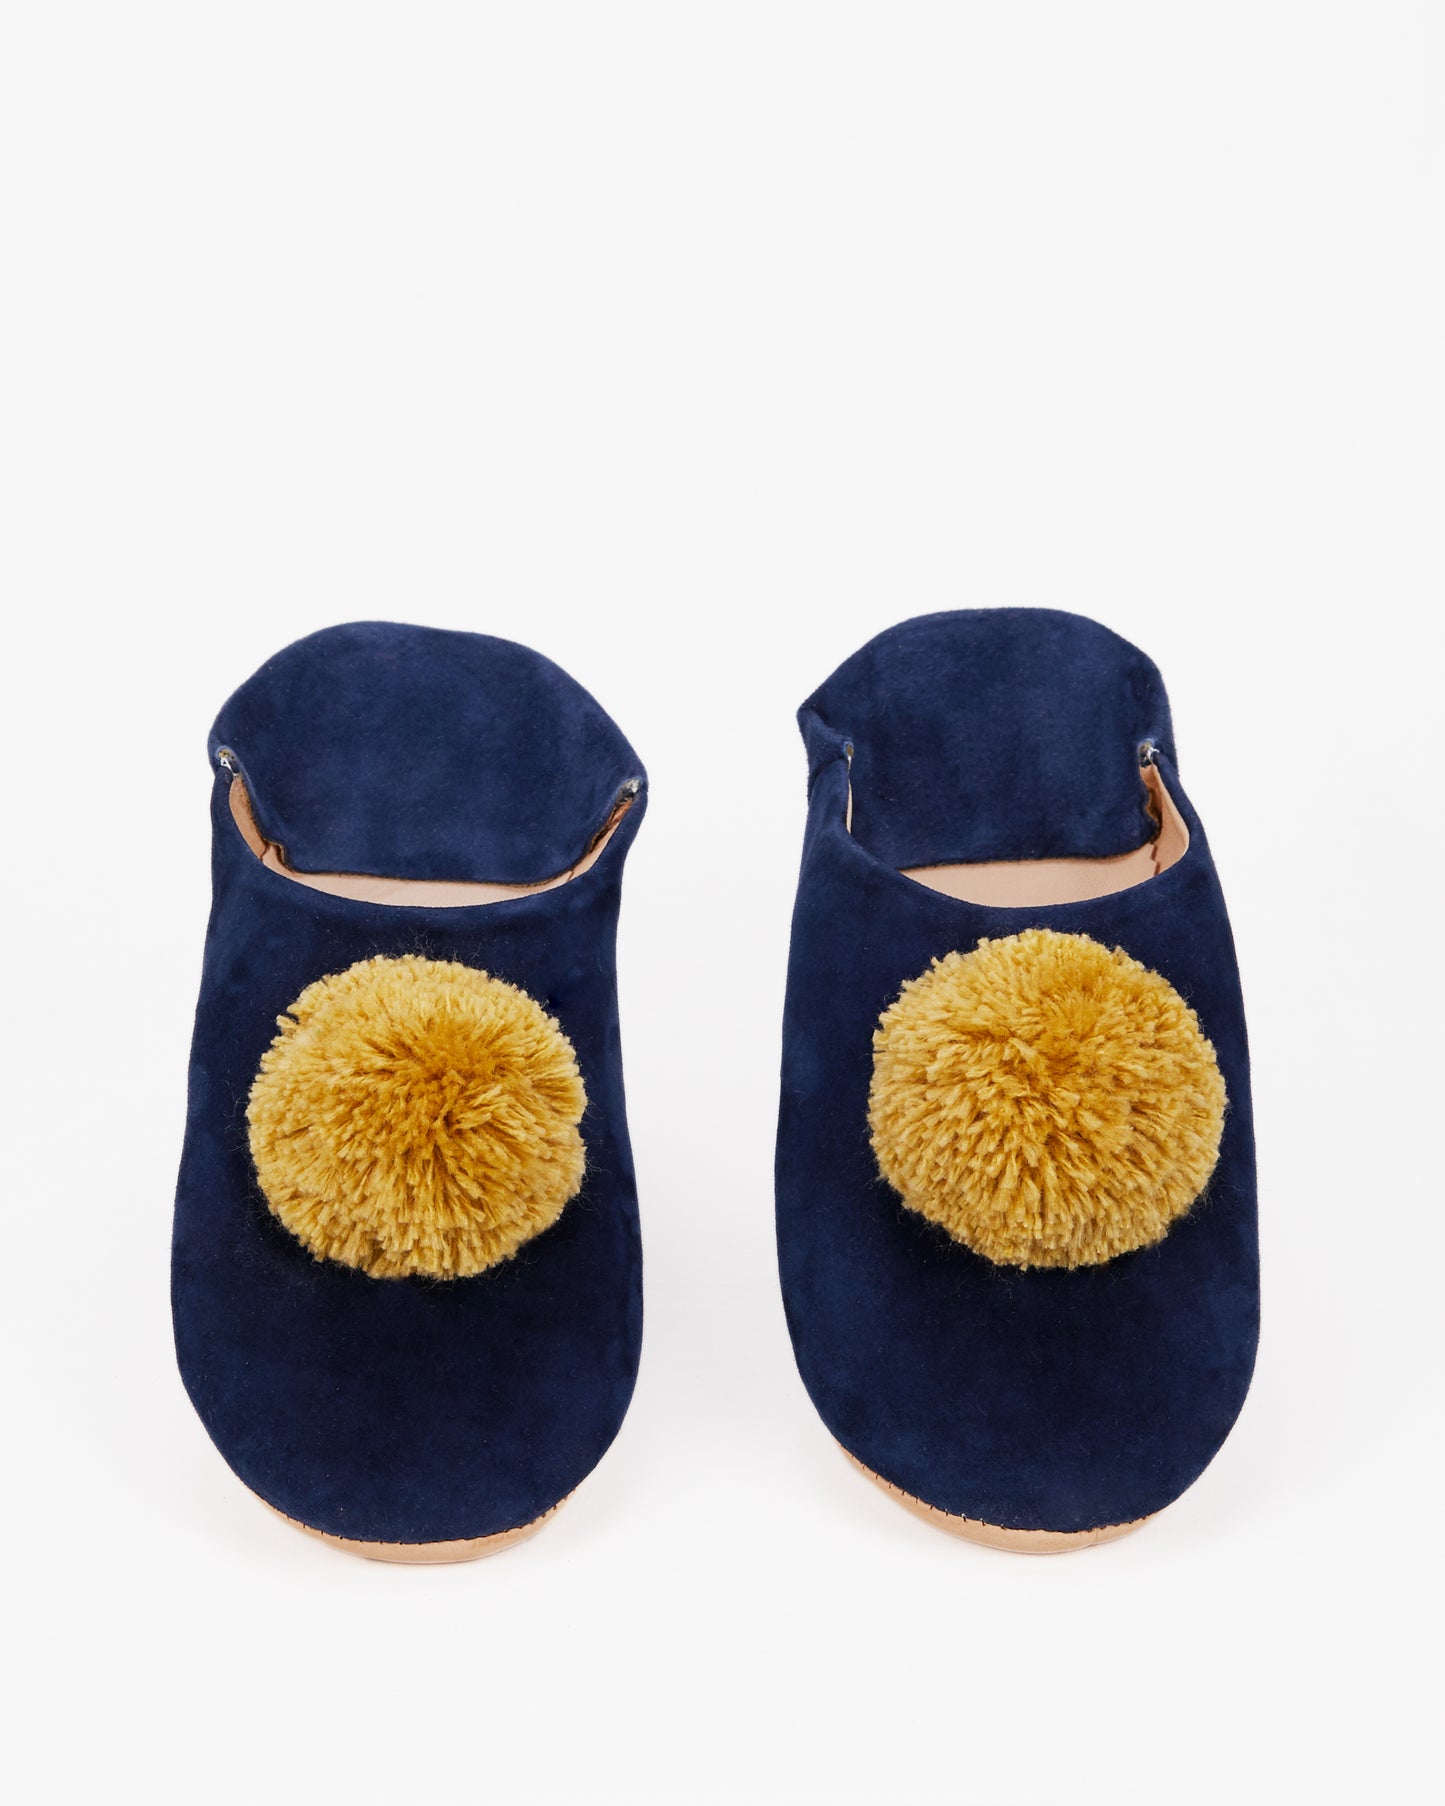 Moroccan Slippers - Navy- Yellow Pom Poms